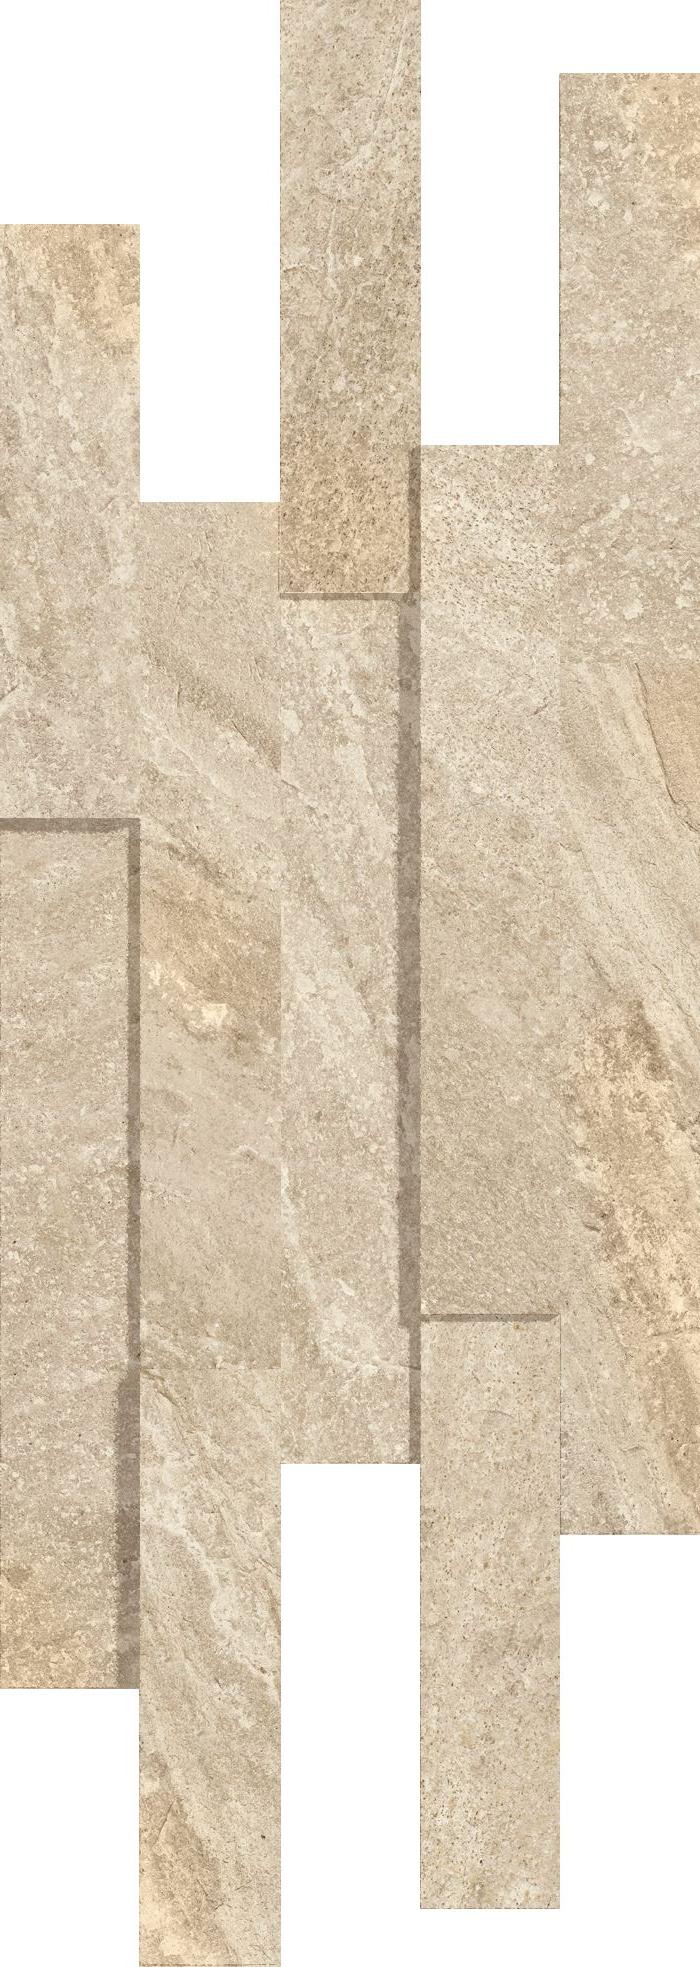 Плитка из керамогранита матовая Italon Клаймб 28x78 бежевый (620110000057) плитка из керамогранита матовая italon клаймб 28x78 бежевый 620110000057